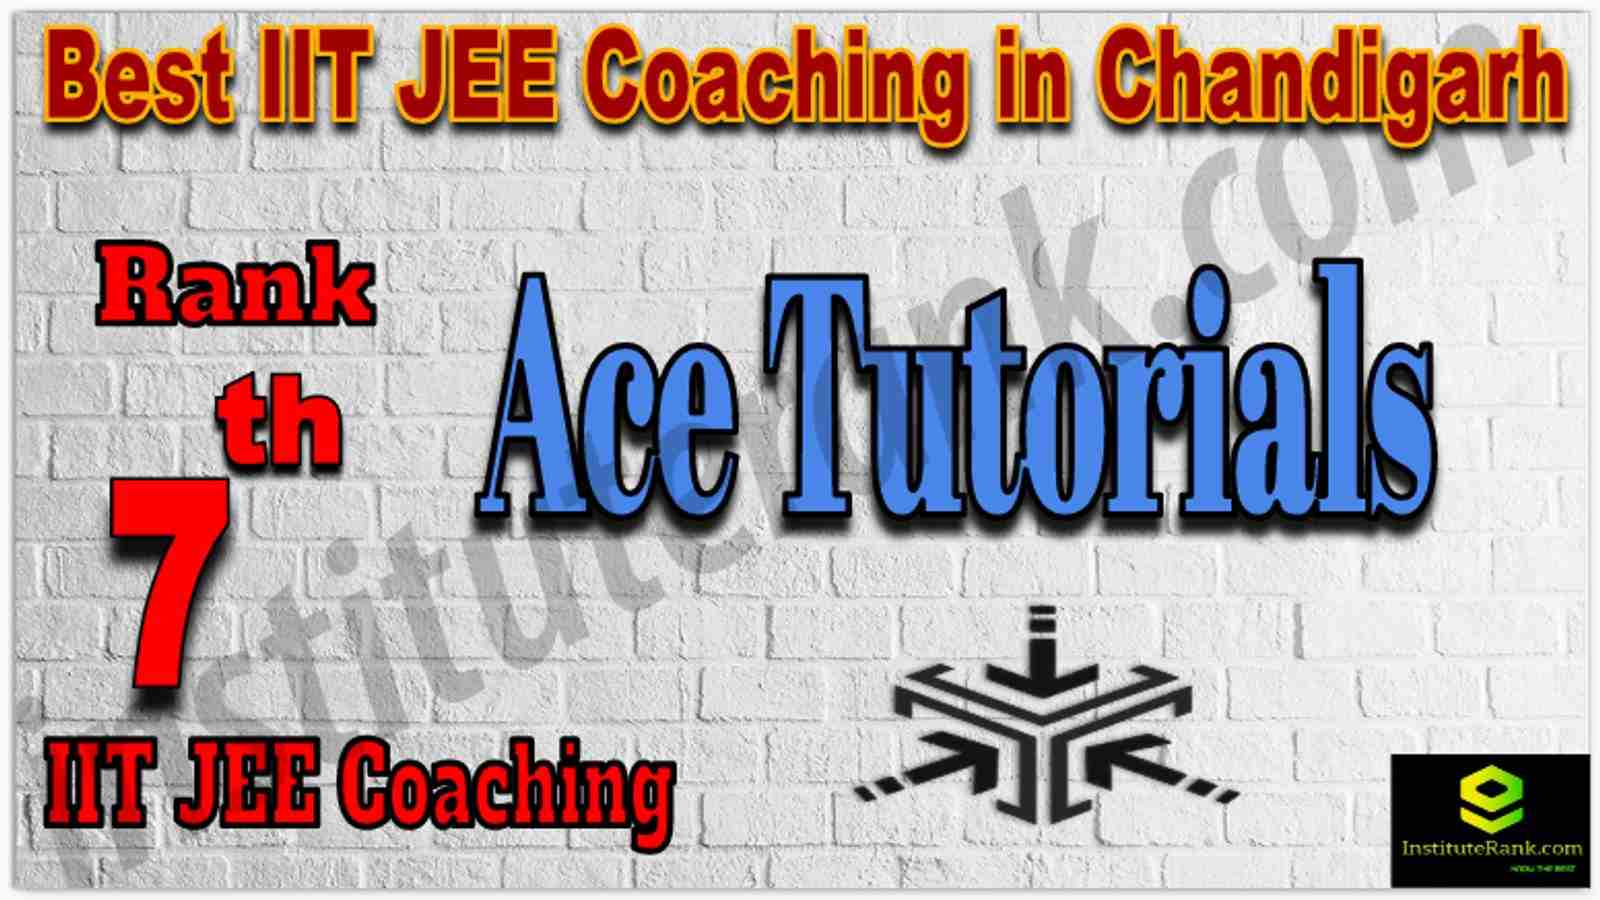 Rank 7th Best IIT JEE Coaching in Chandigarh